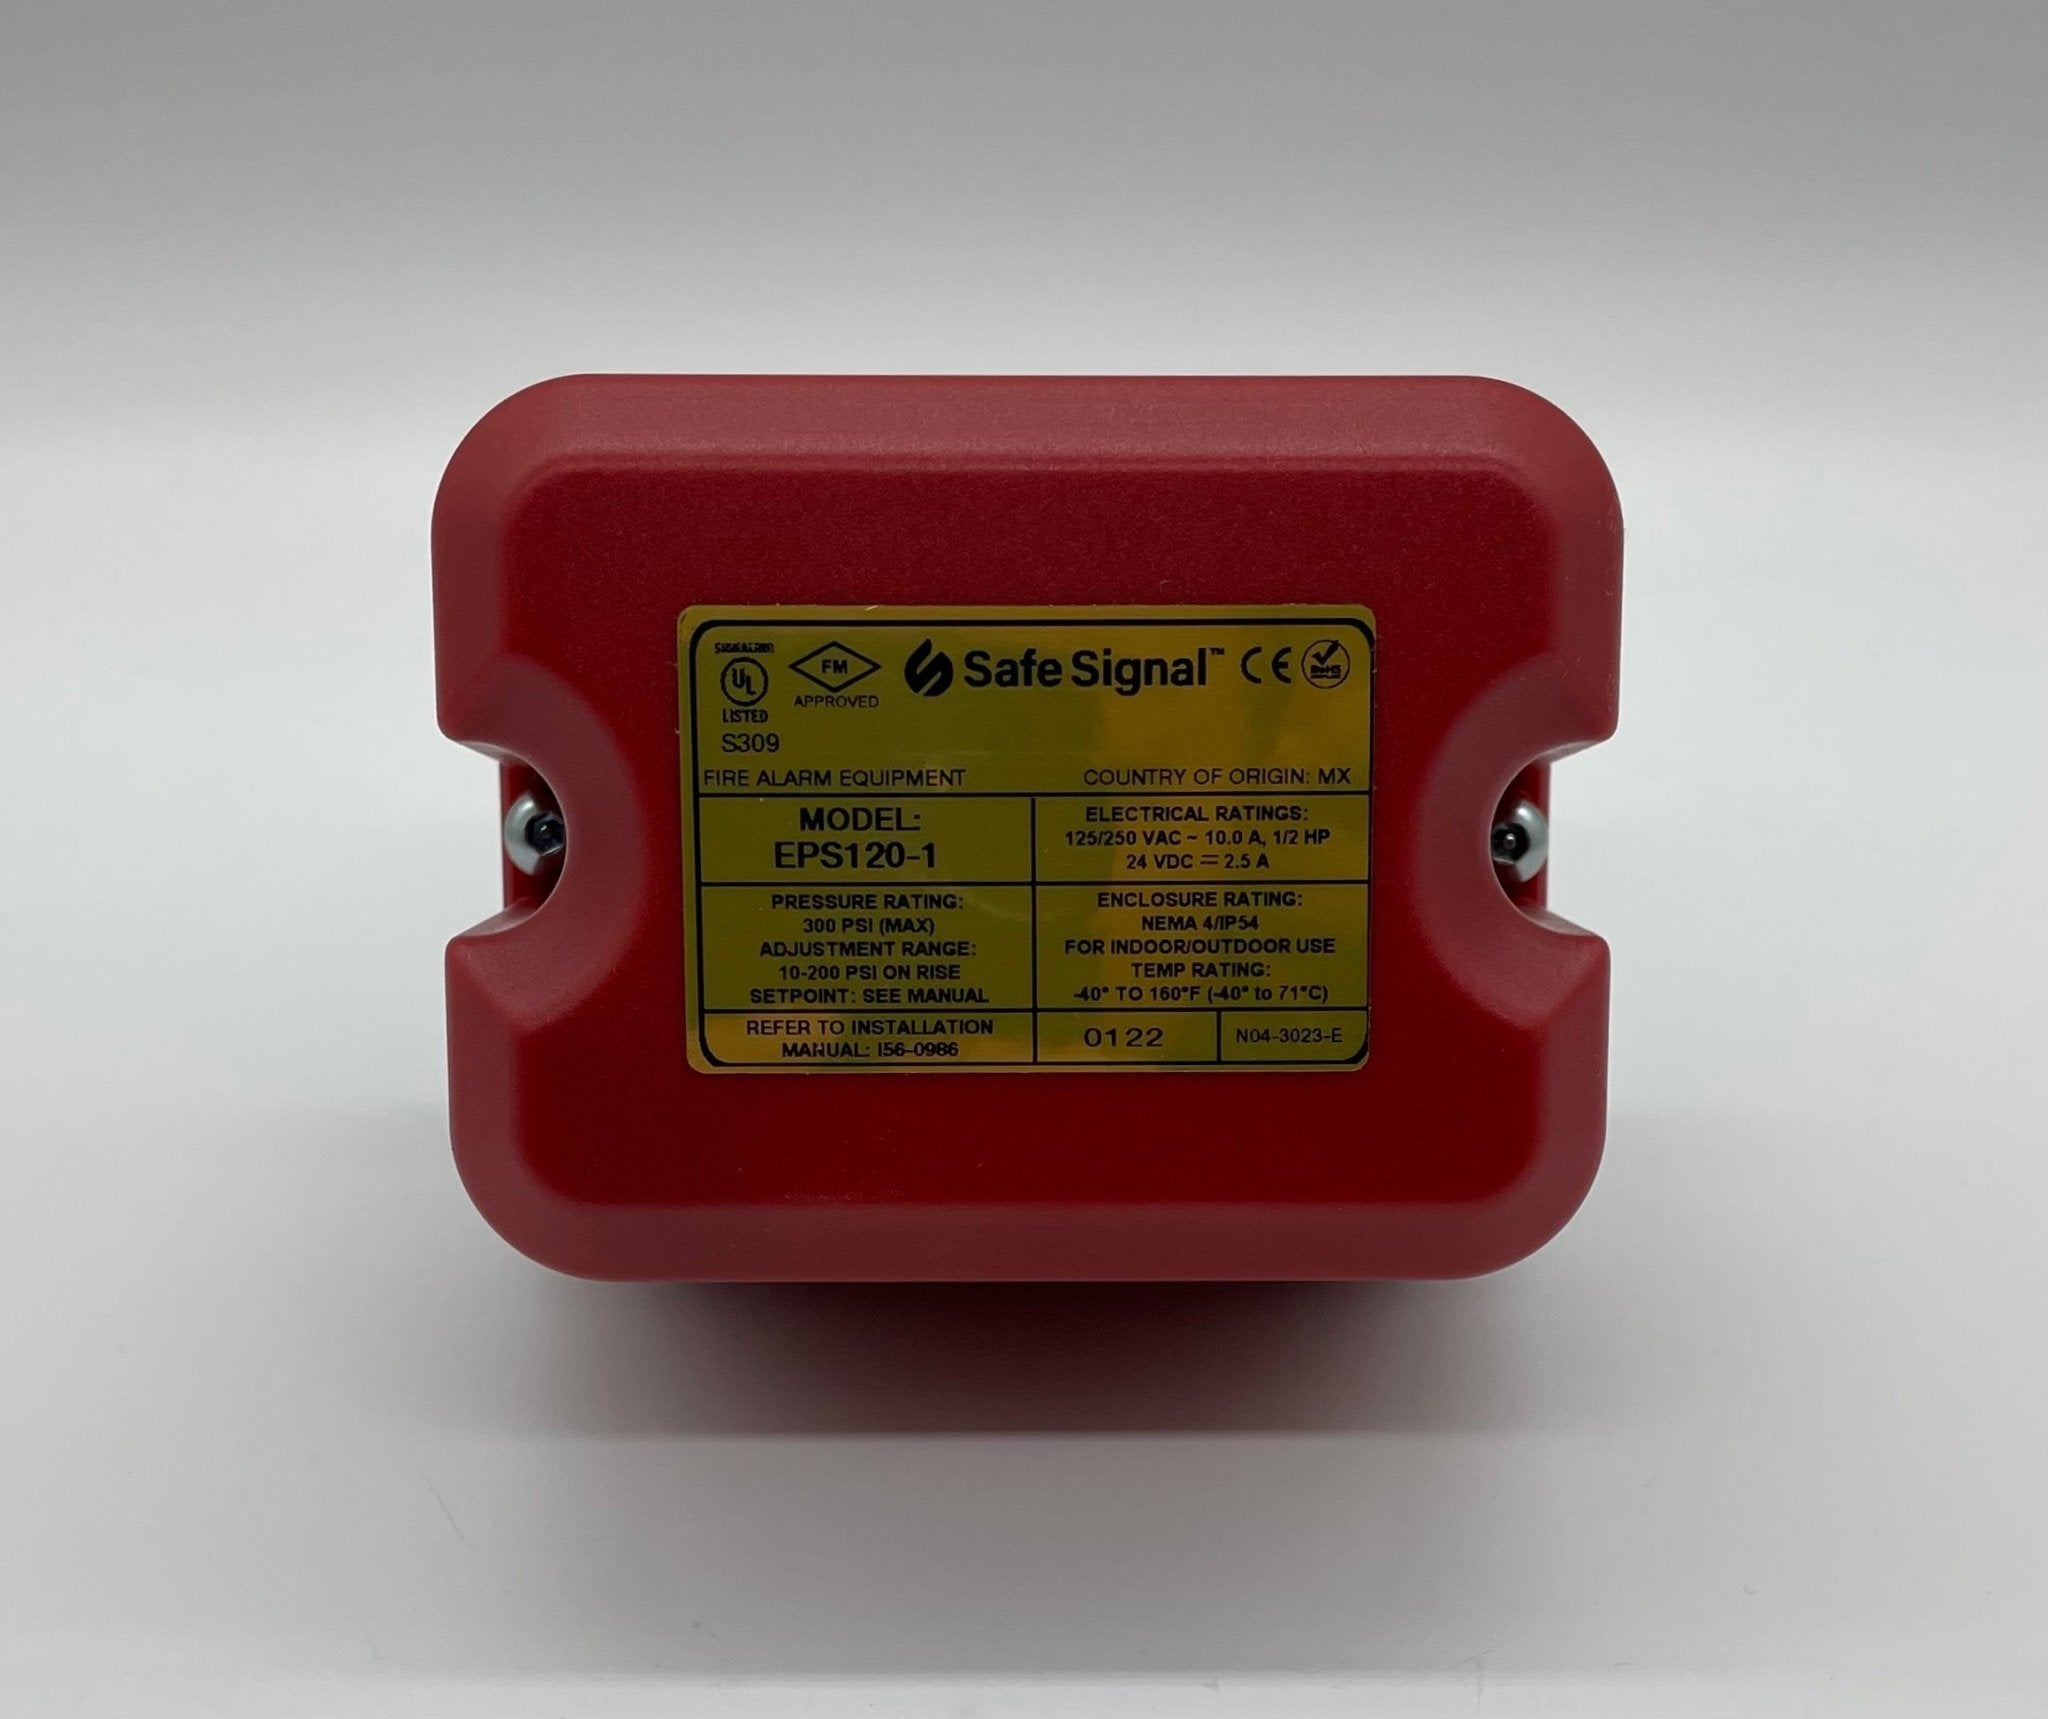 Firelite EPS120-1 - The Fire Alarm Supplier